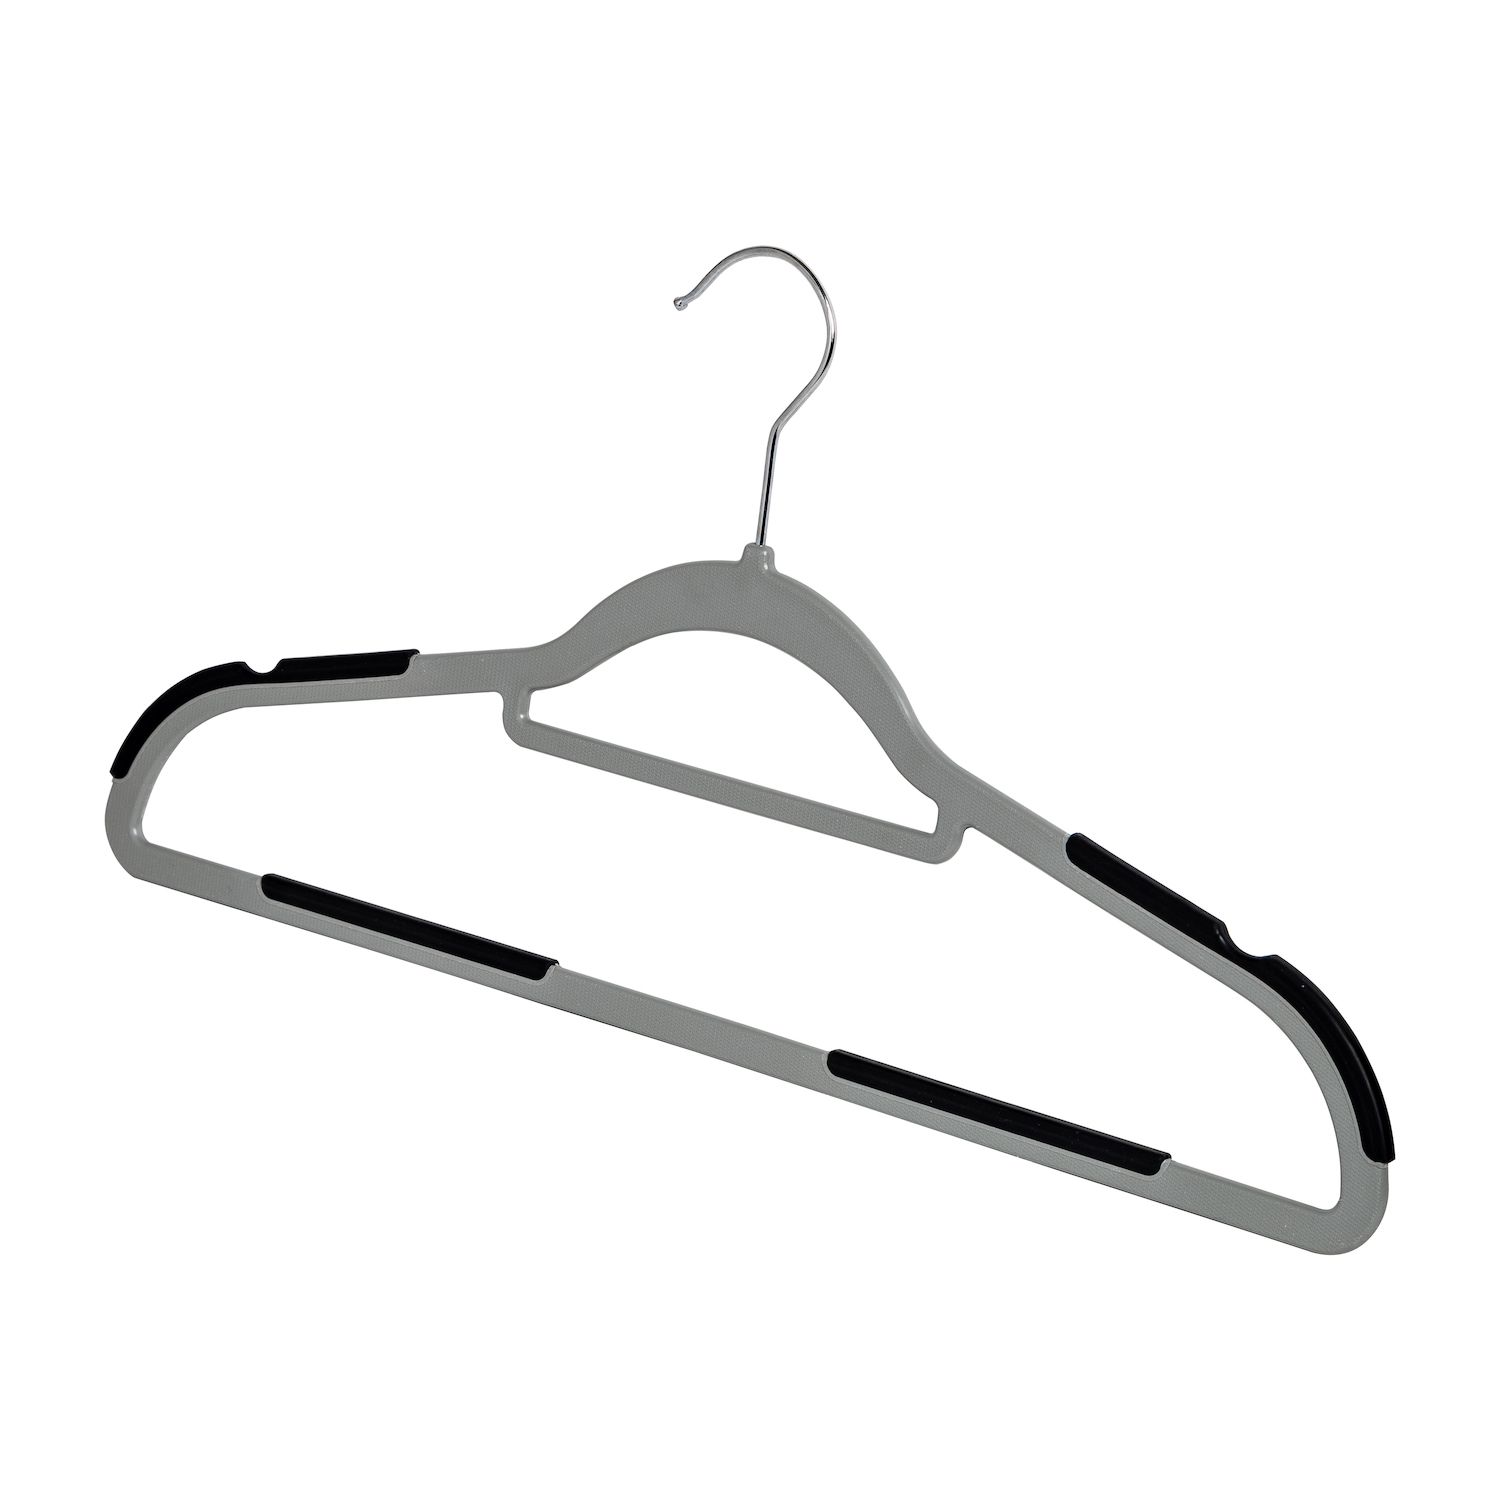 Elama Home 50-Piece Non Slip Hanger Set w/ U-slide in White and